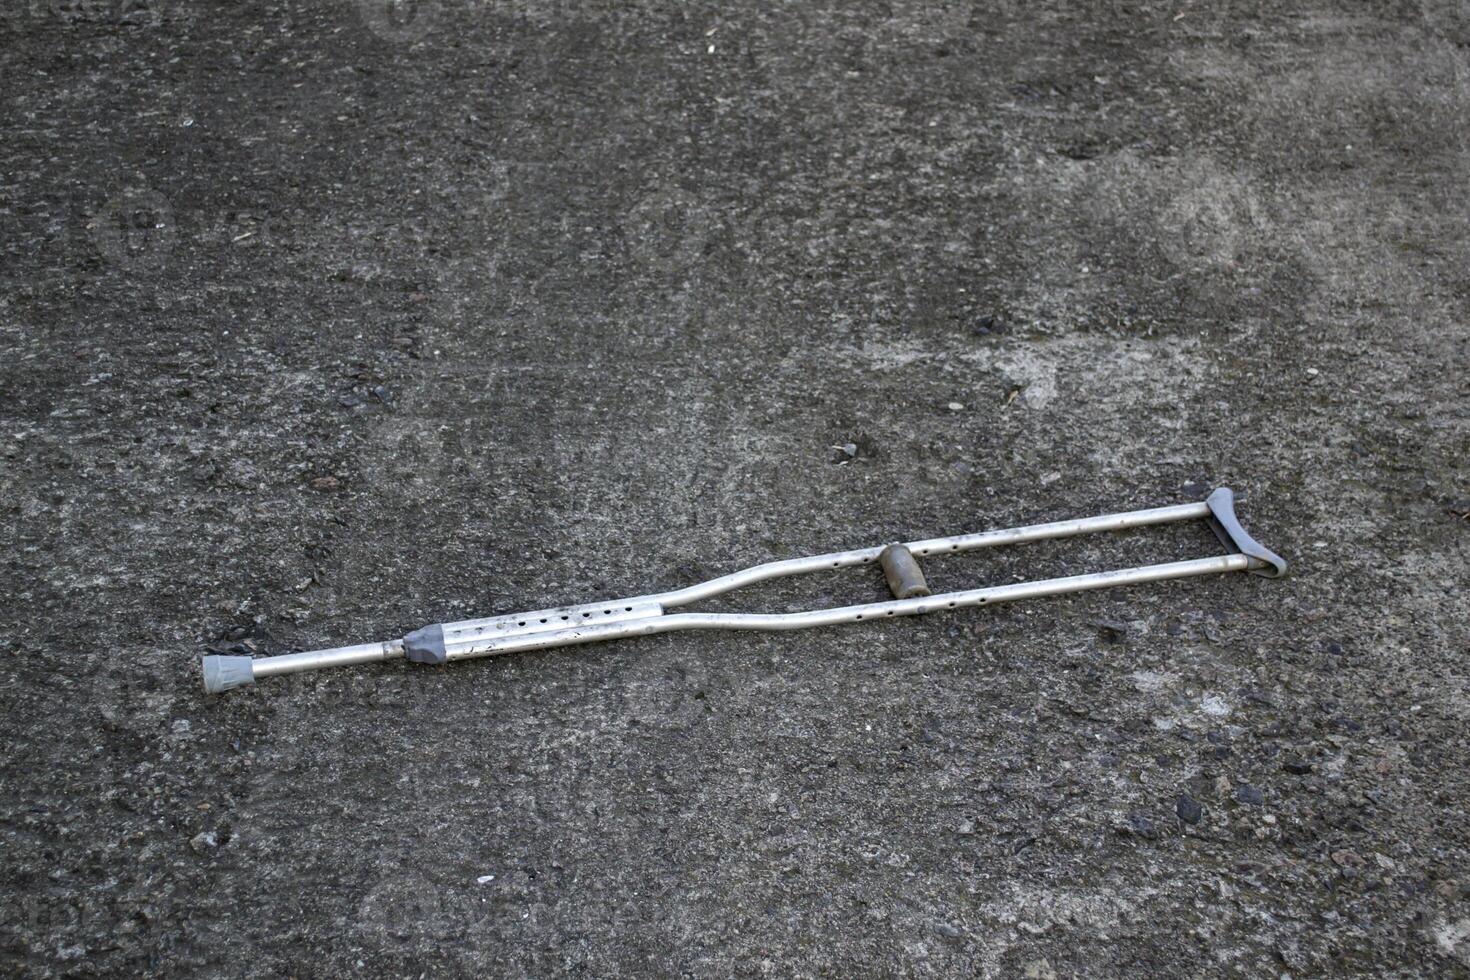 A crutch on asphalt. photo